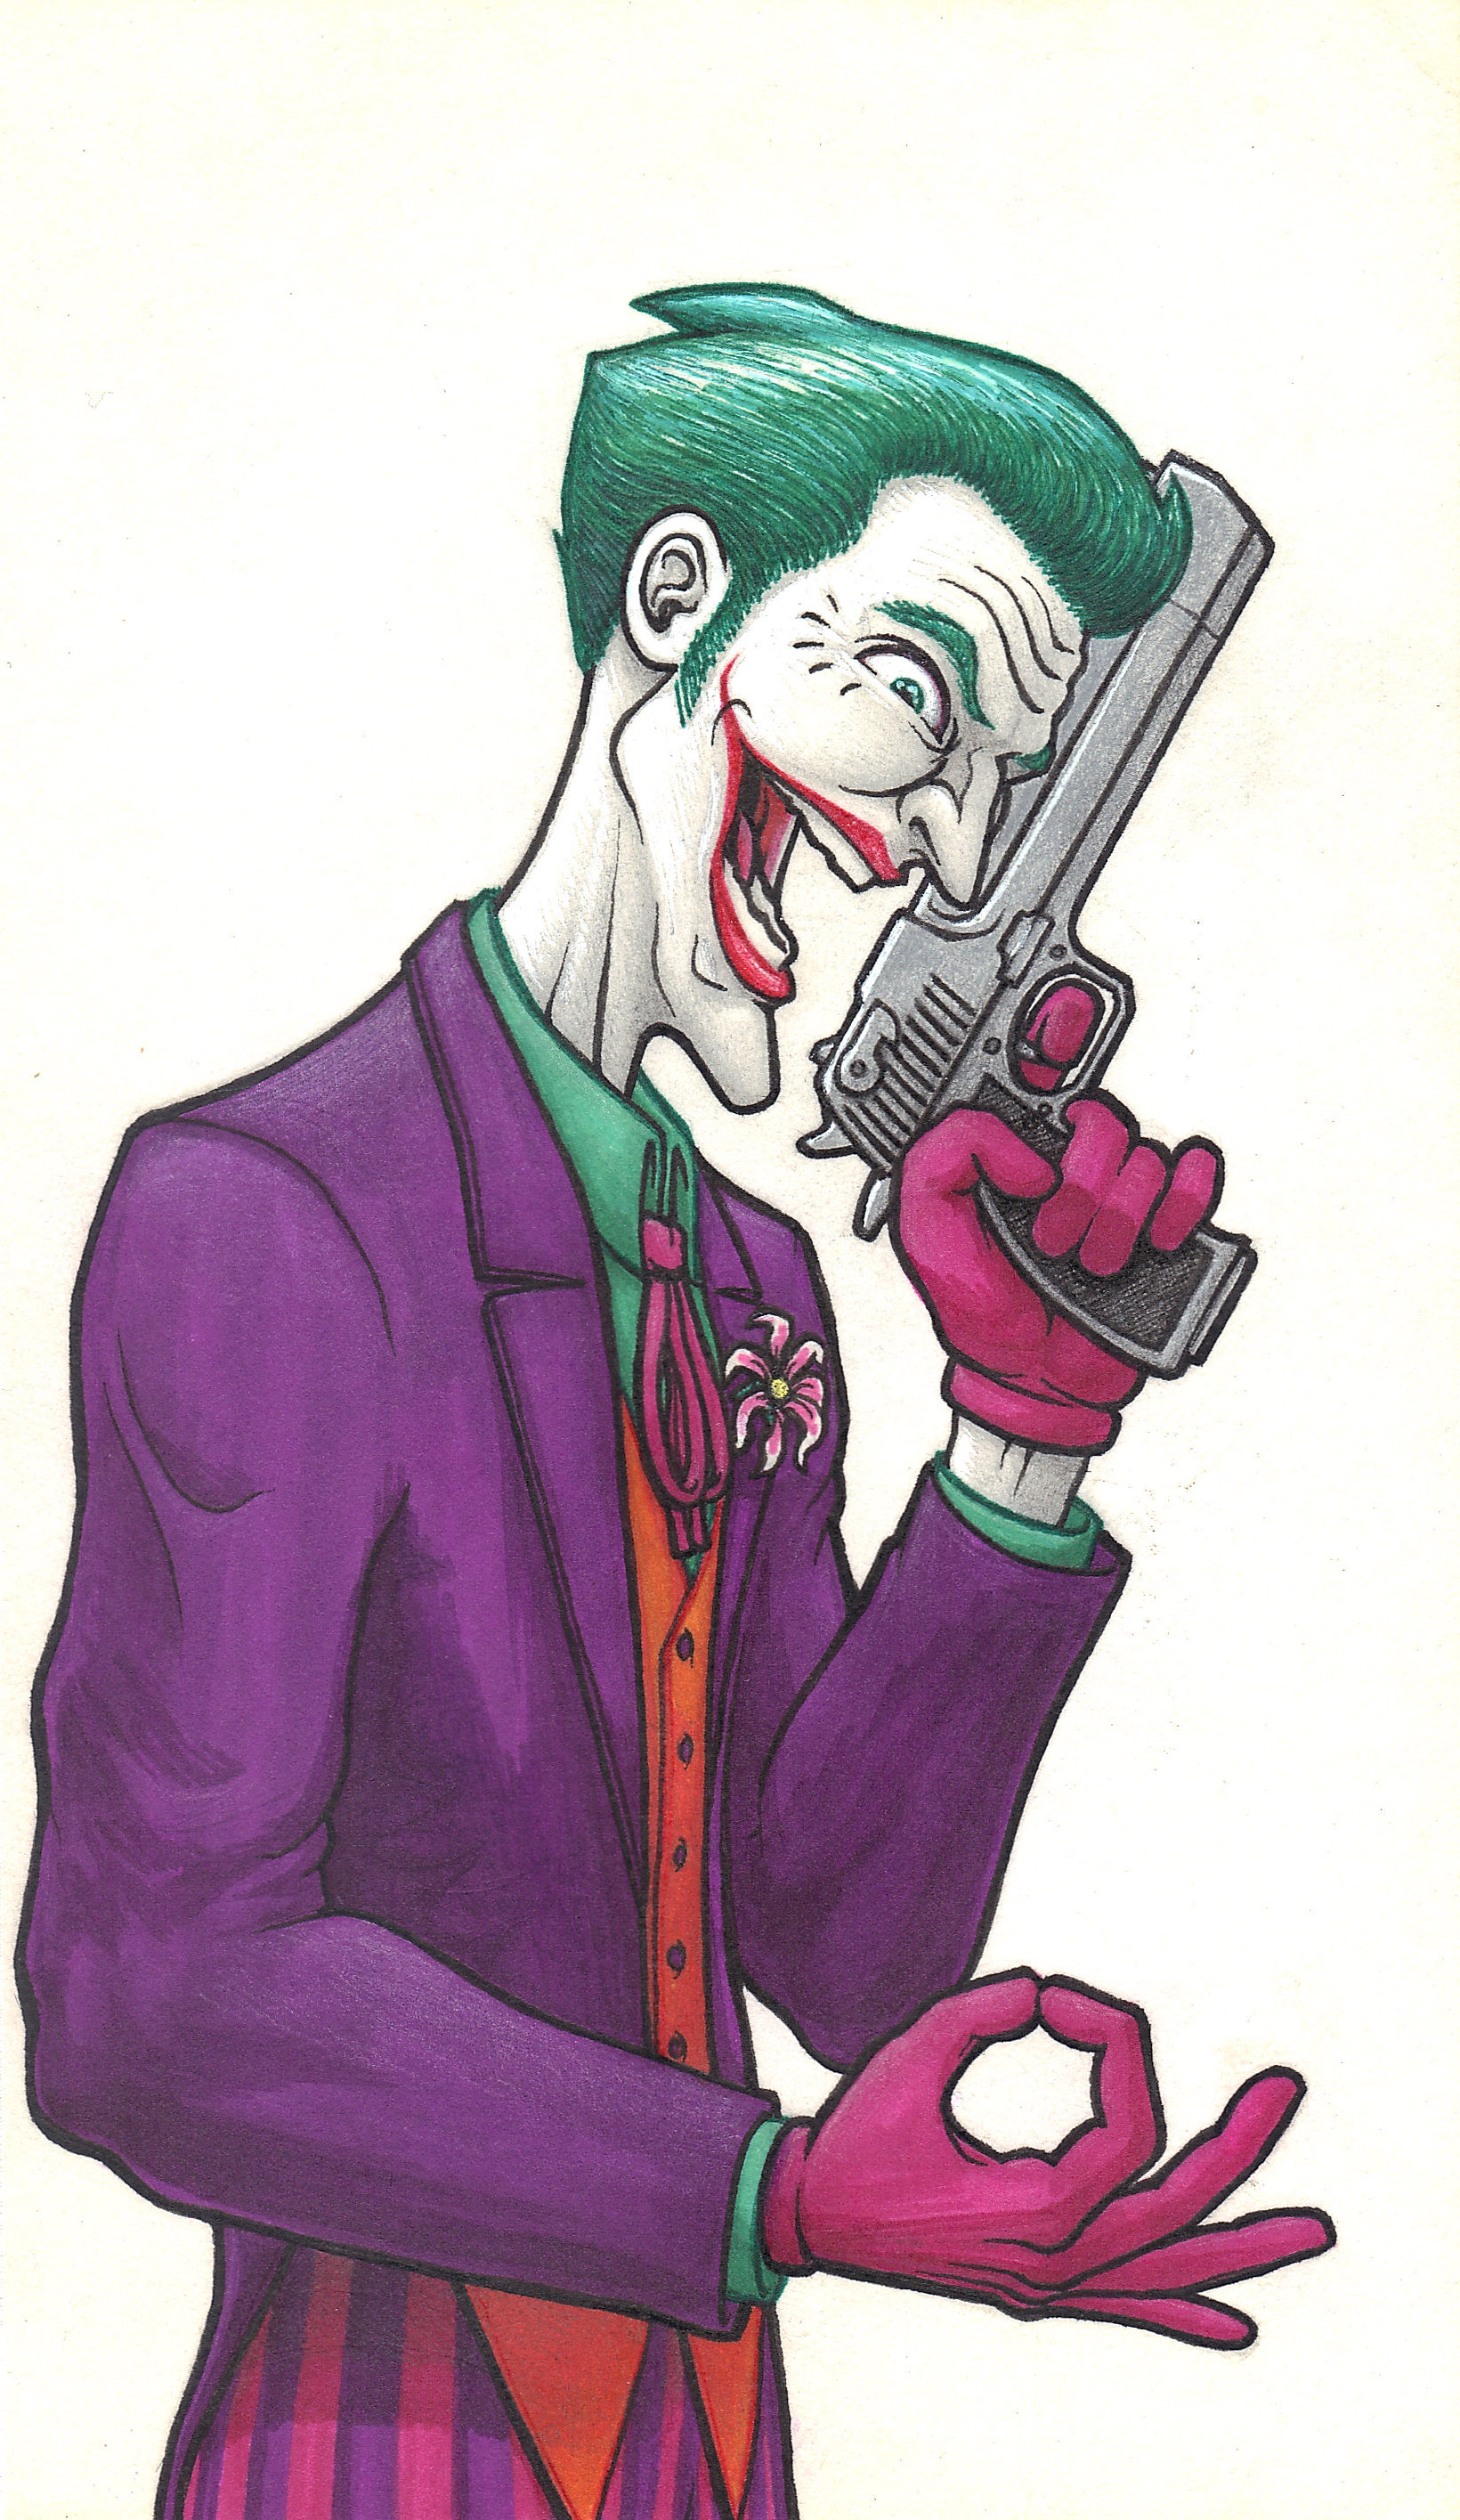 the Joker sketch